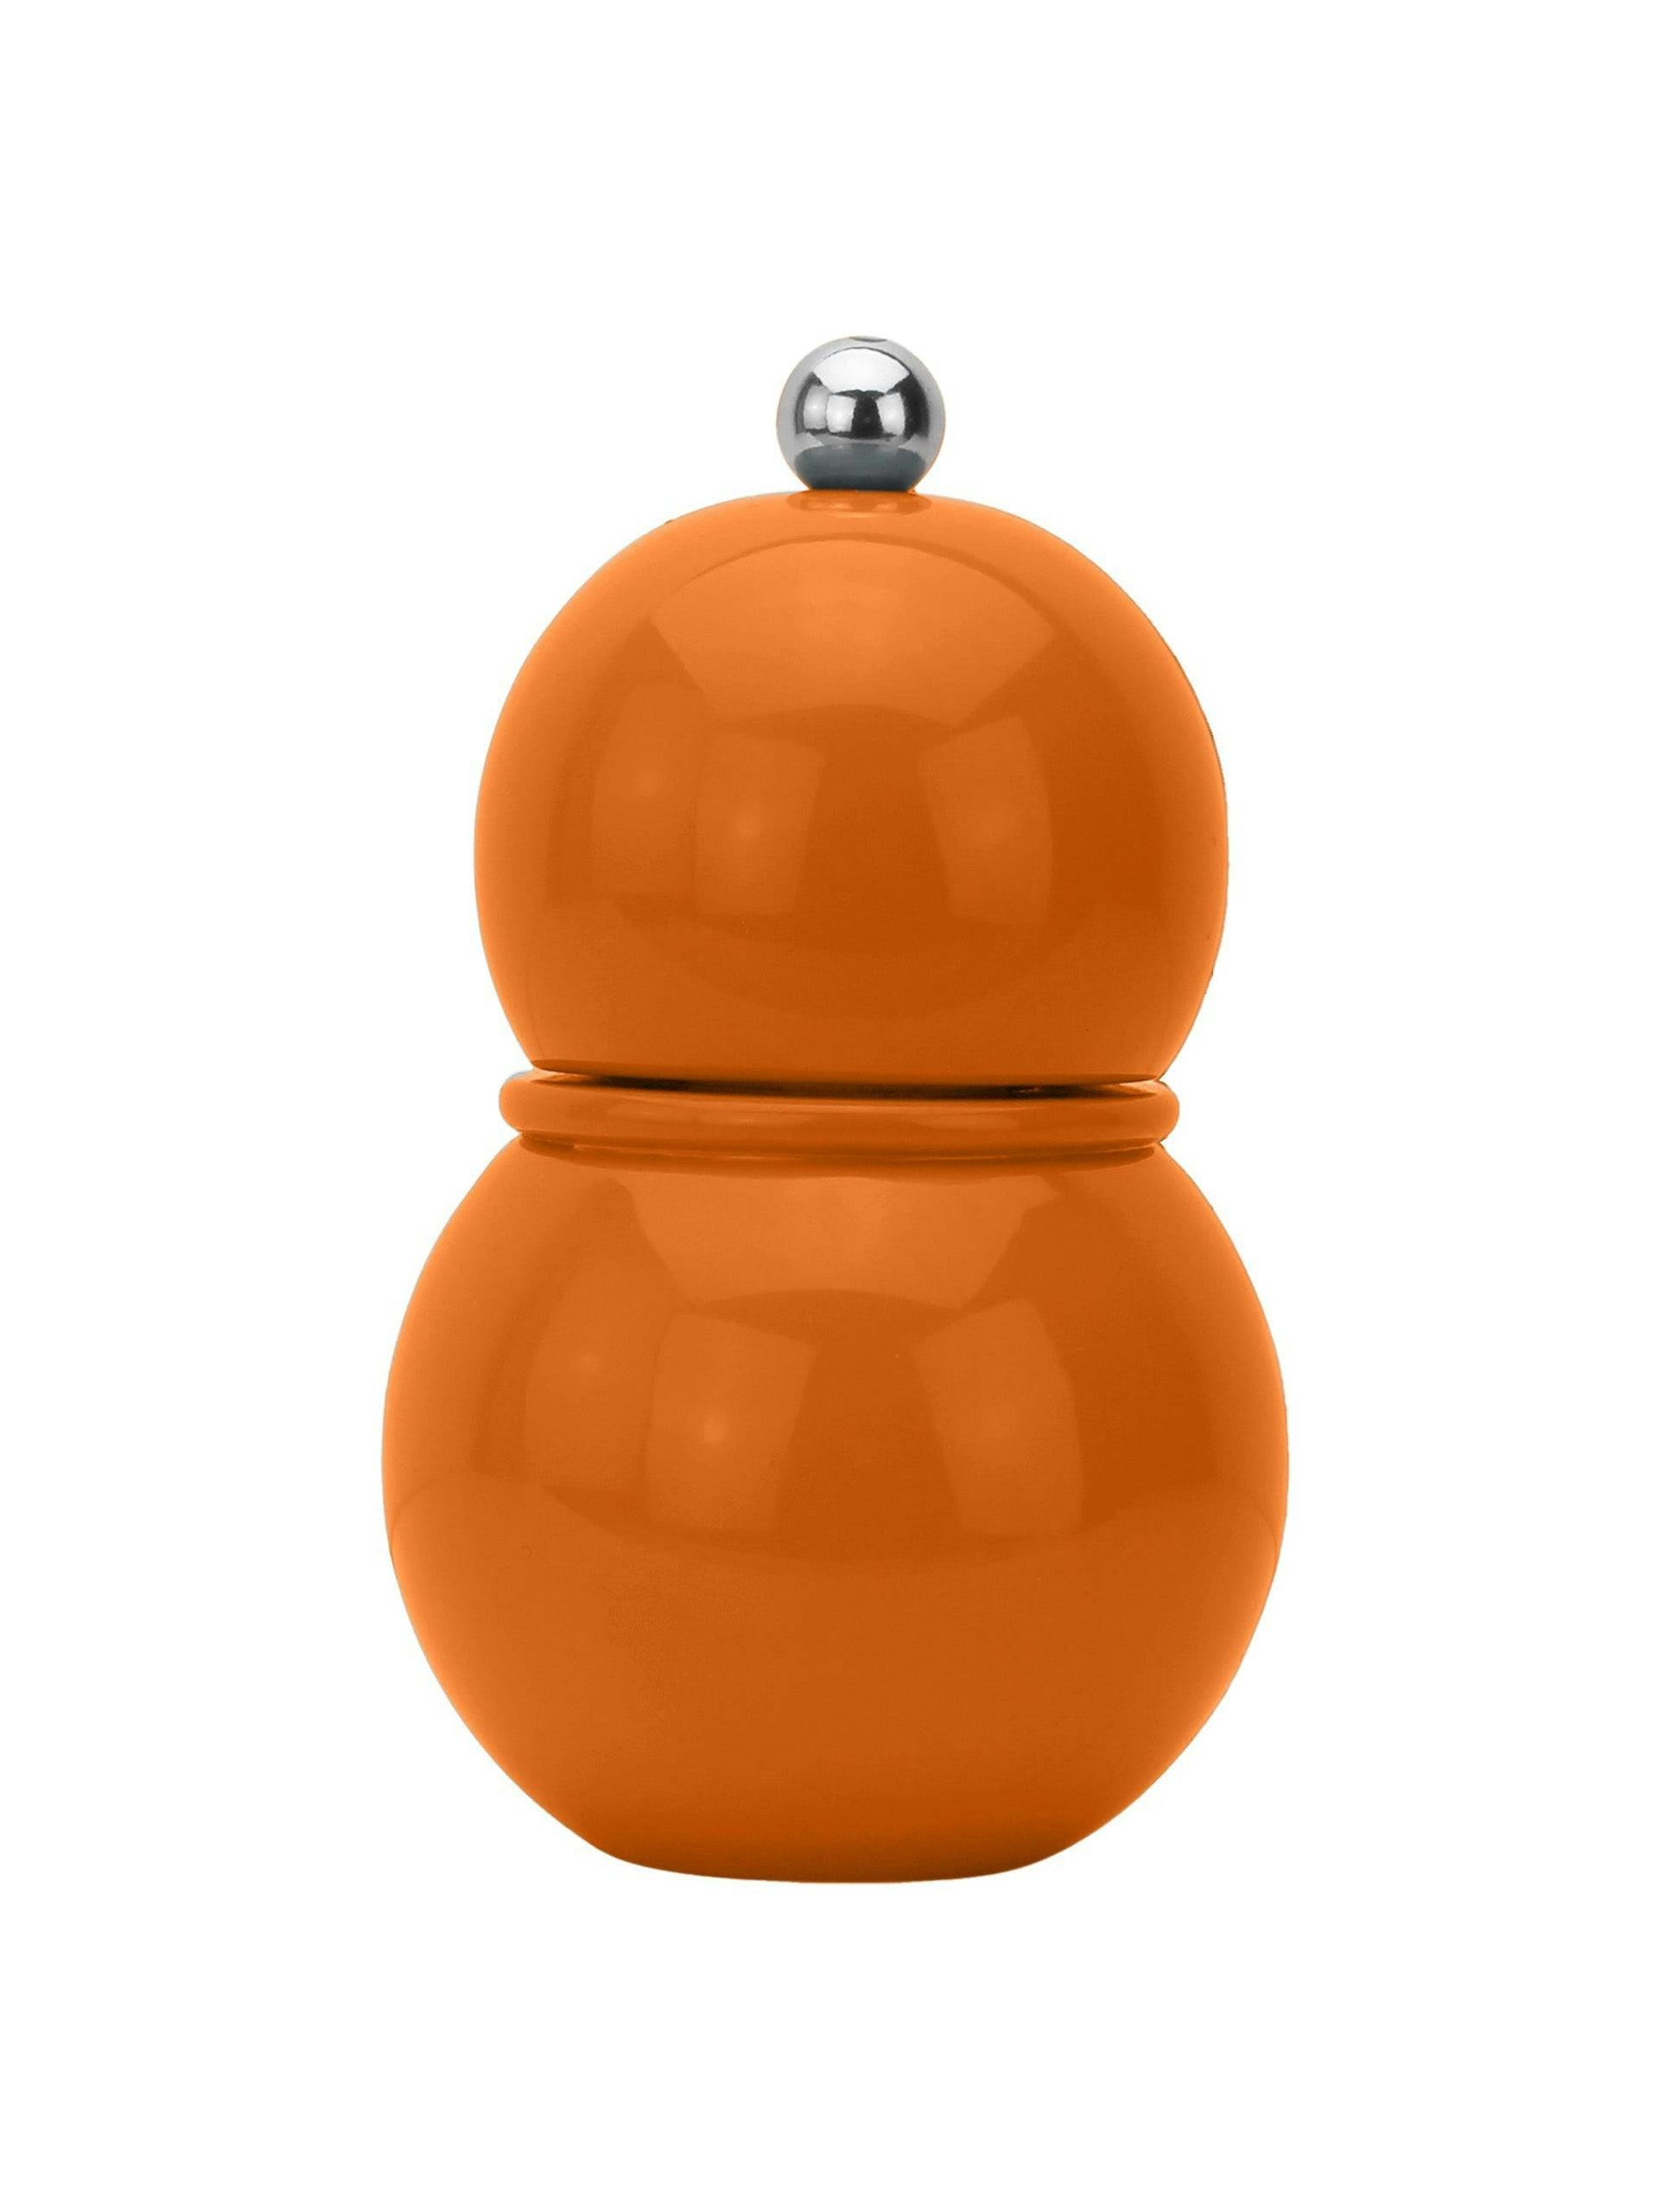 Orange Chubbie salt and pepper grinder